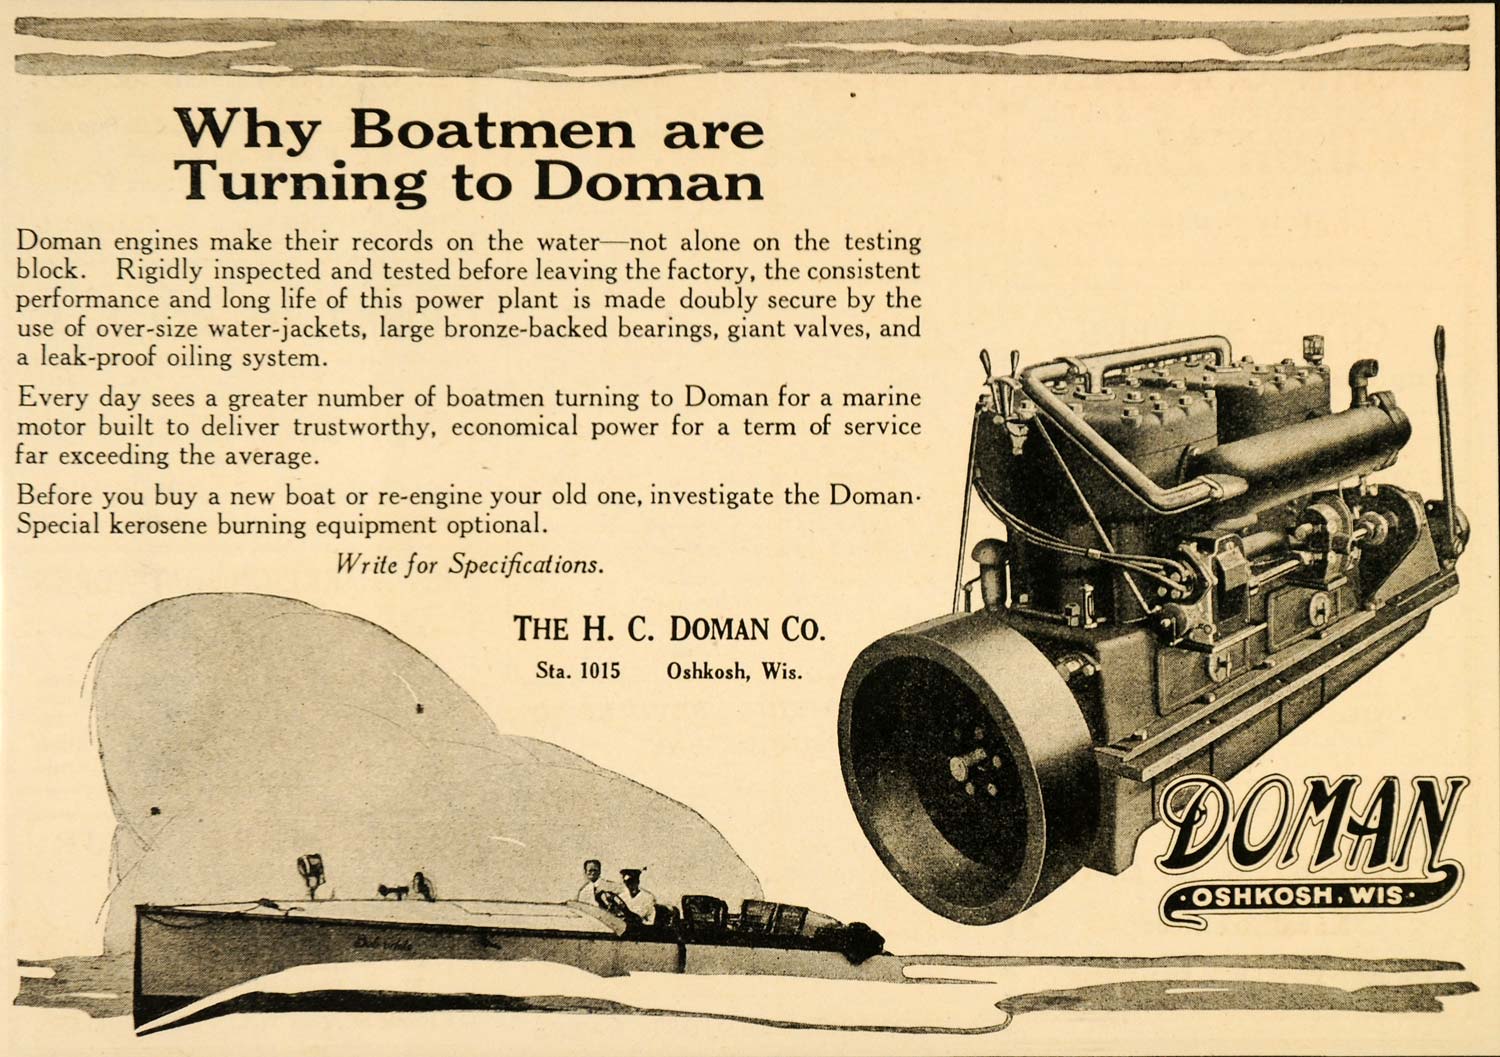 1920 Ad H. C. Doman Boating Engines Oshkosh Wisconsin - ORIGINAL ADVERTISING MB1